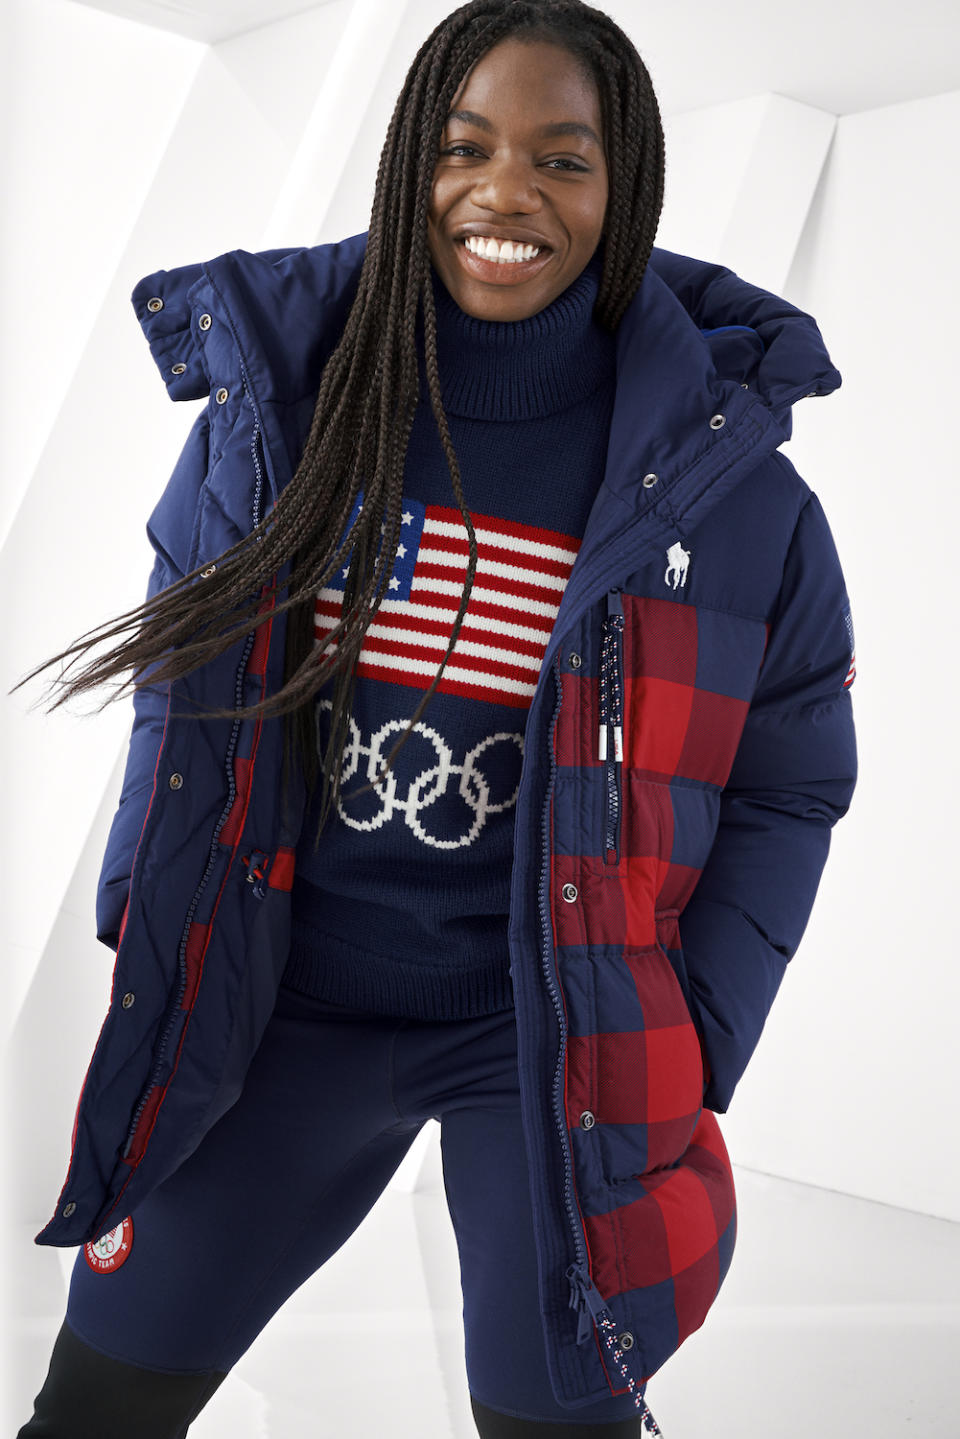 Aja Evans shows off the American brand’s Olympic fashions. - Credit: Sebastian Kim